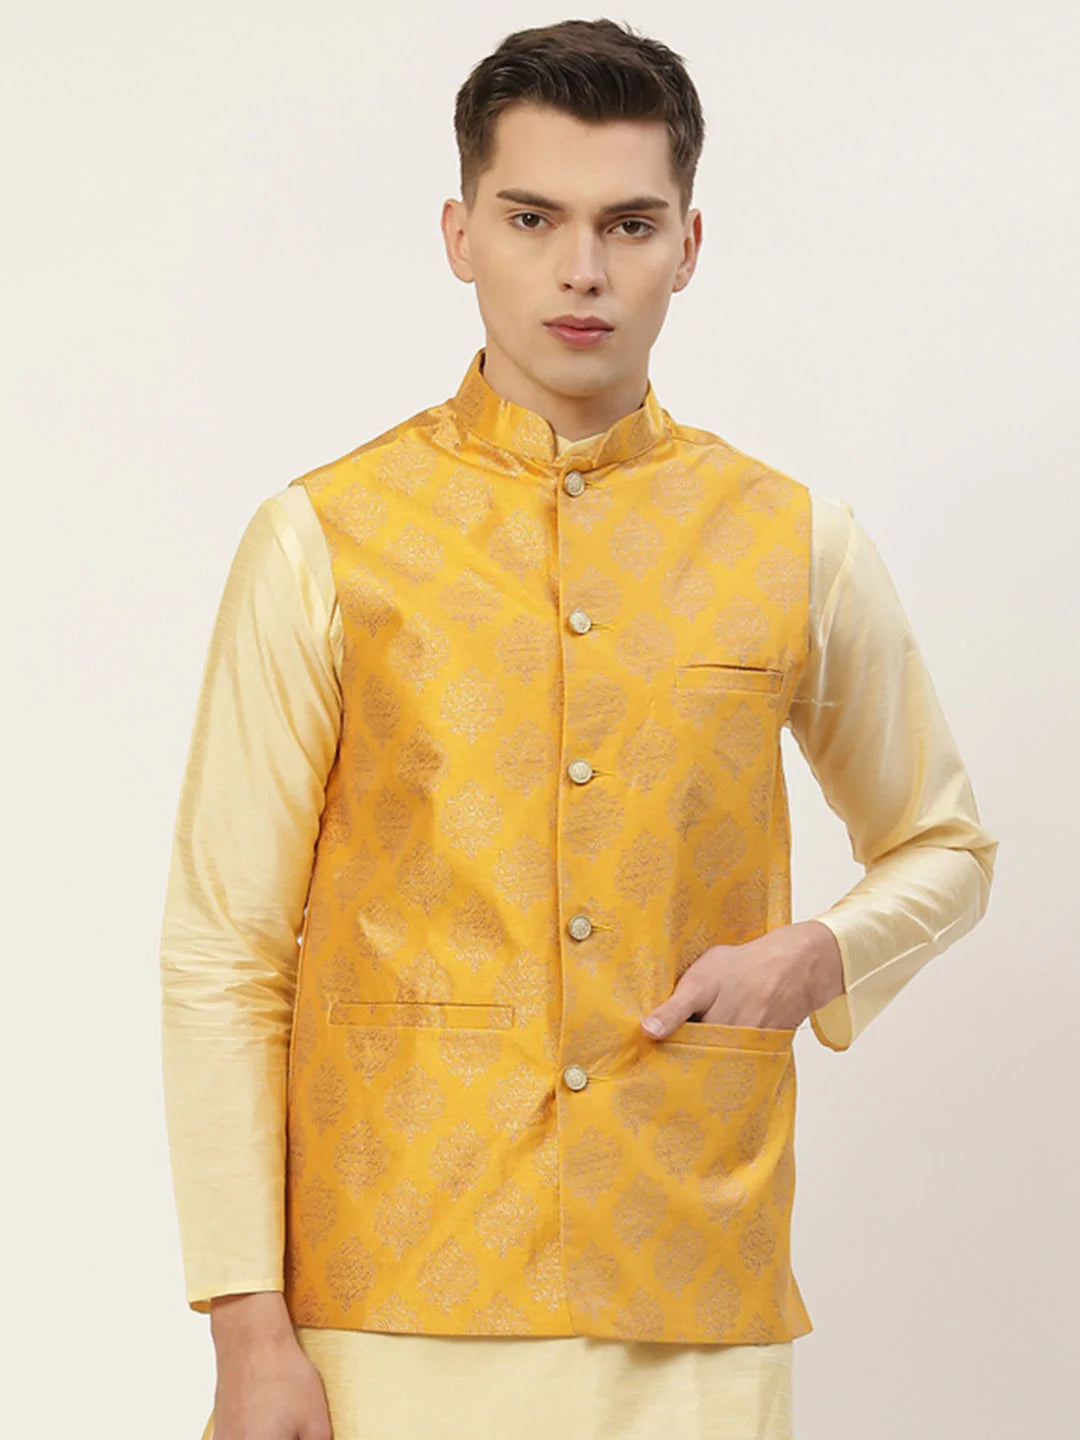 Men's Mustard Jacquard Silk Woven Design Nehru Jacket